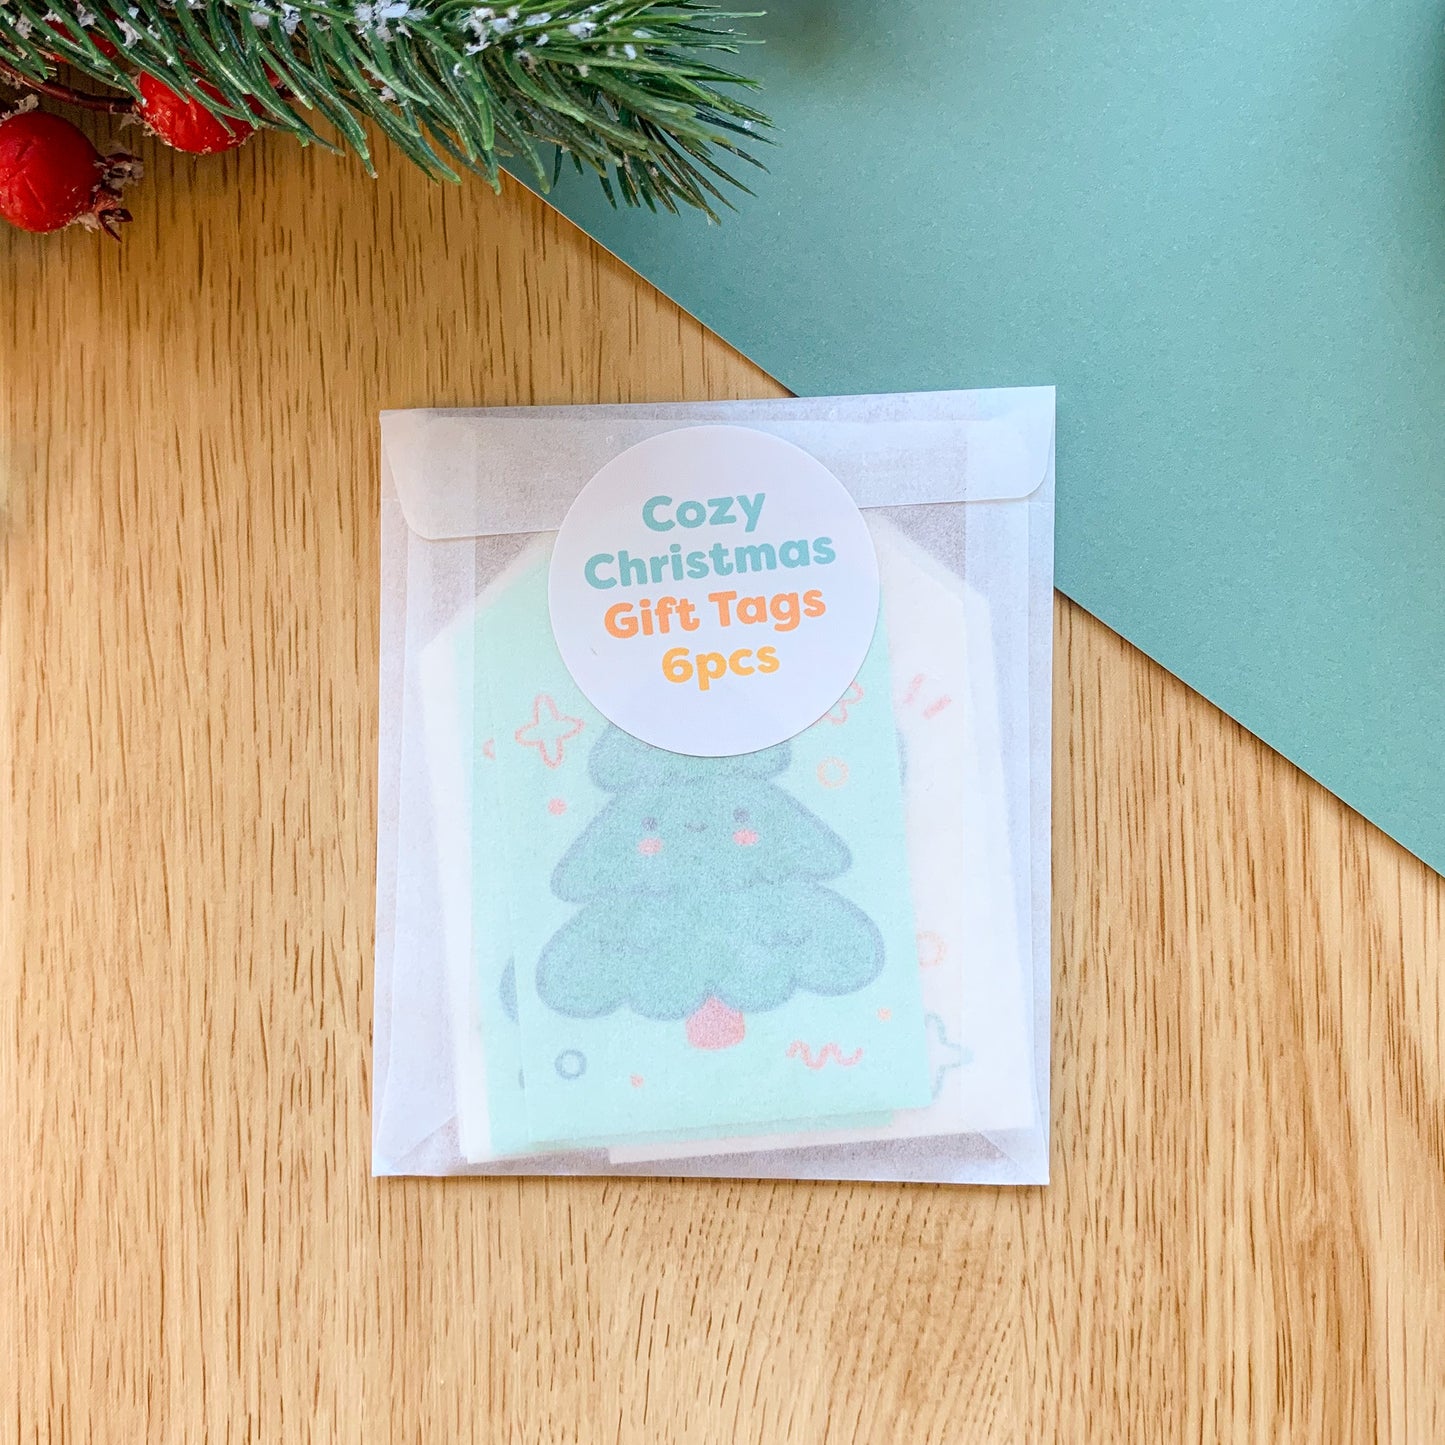 Cozy Christmas - Gift Tags (6 pcs)